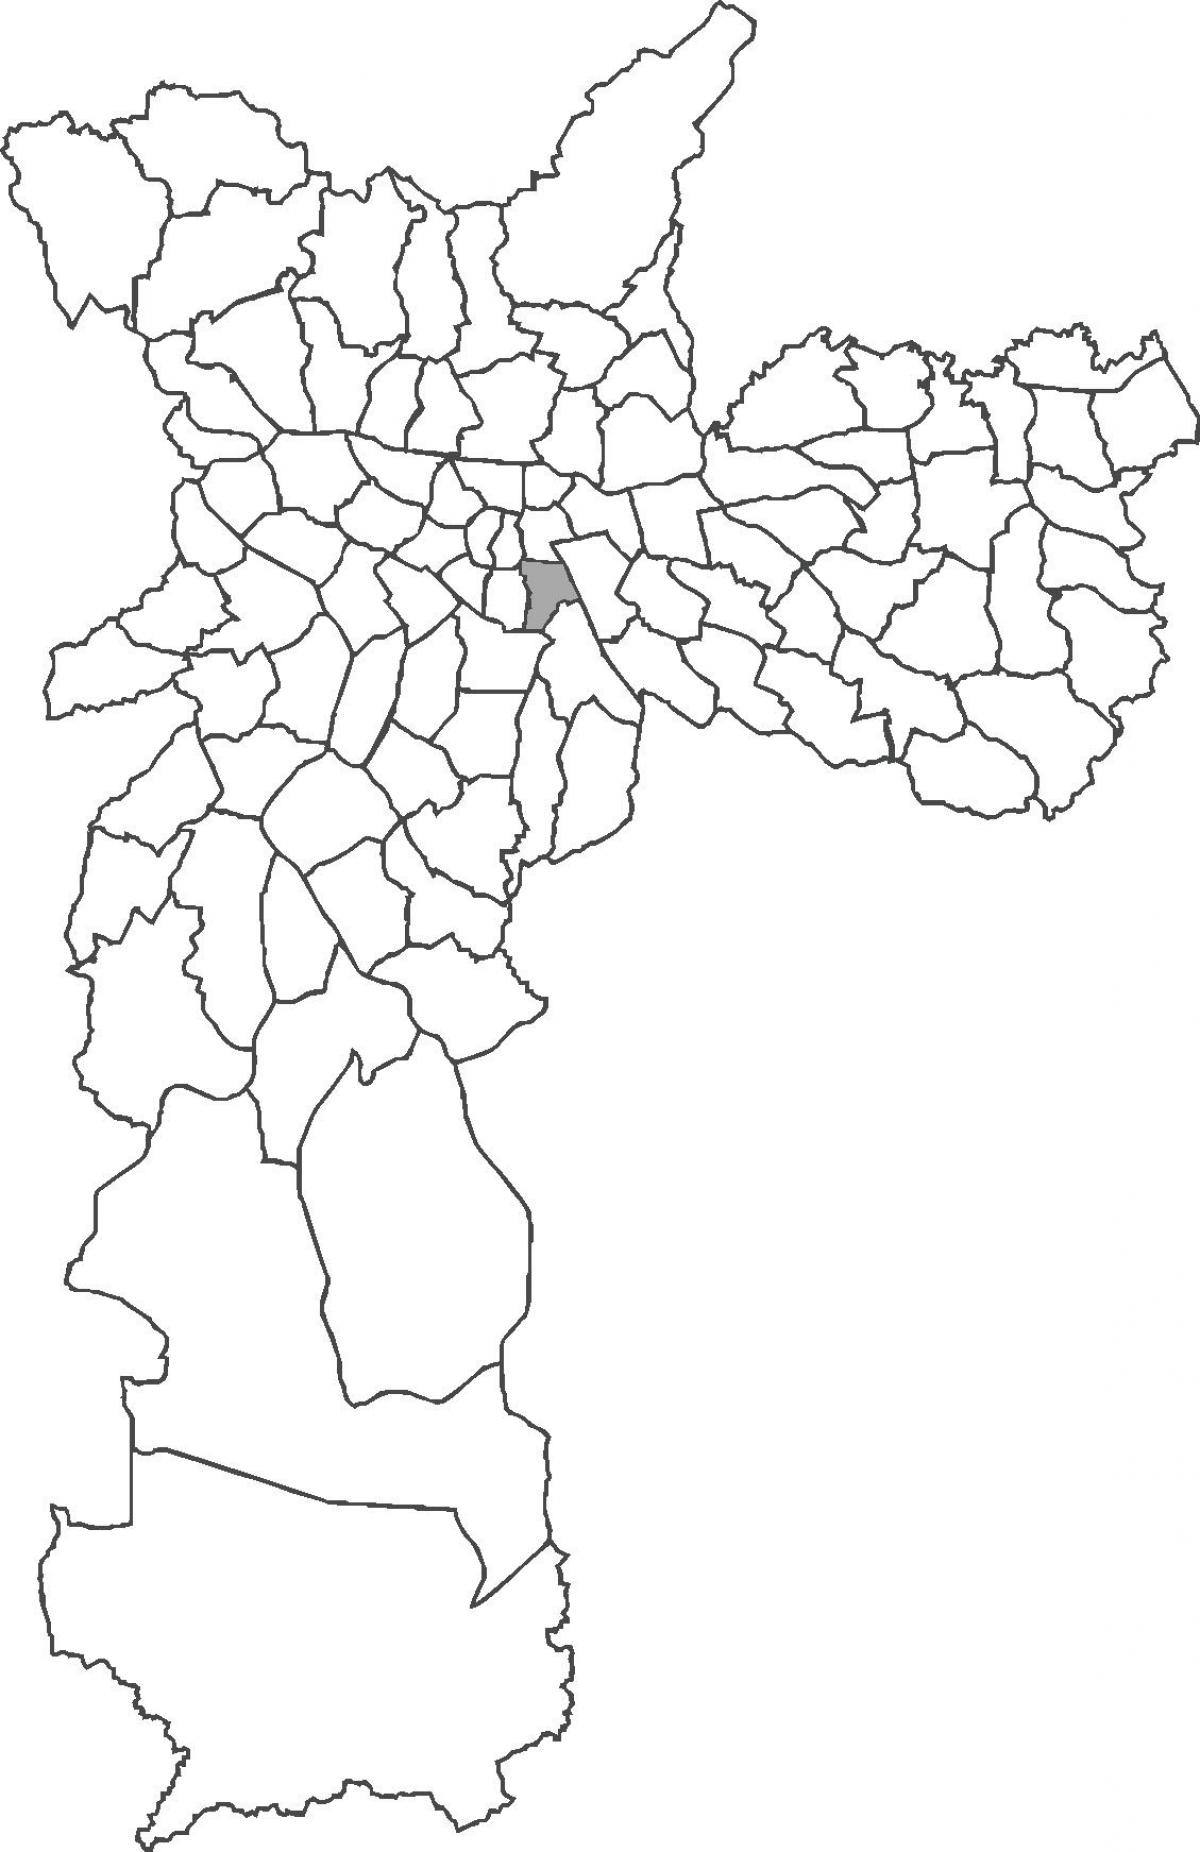 Kart over distriktet Cambuci